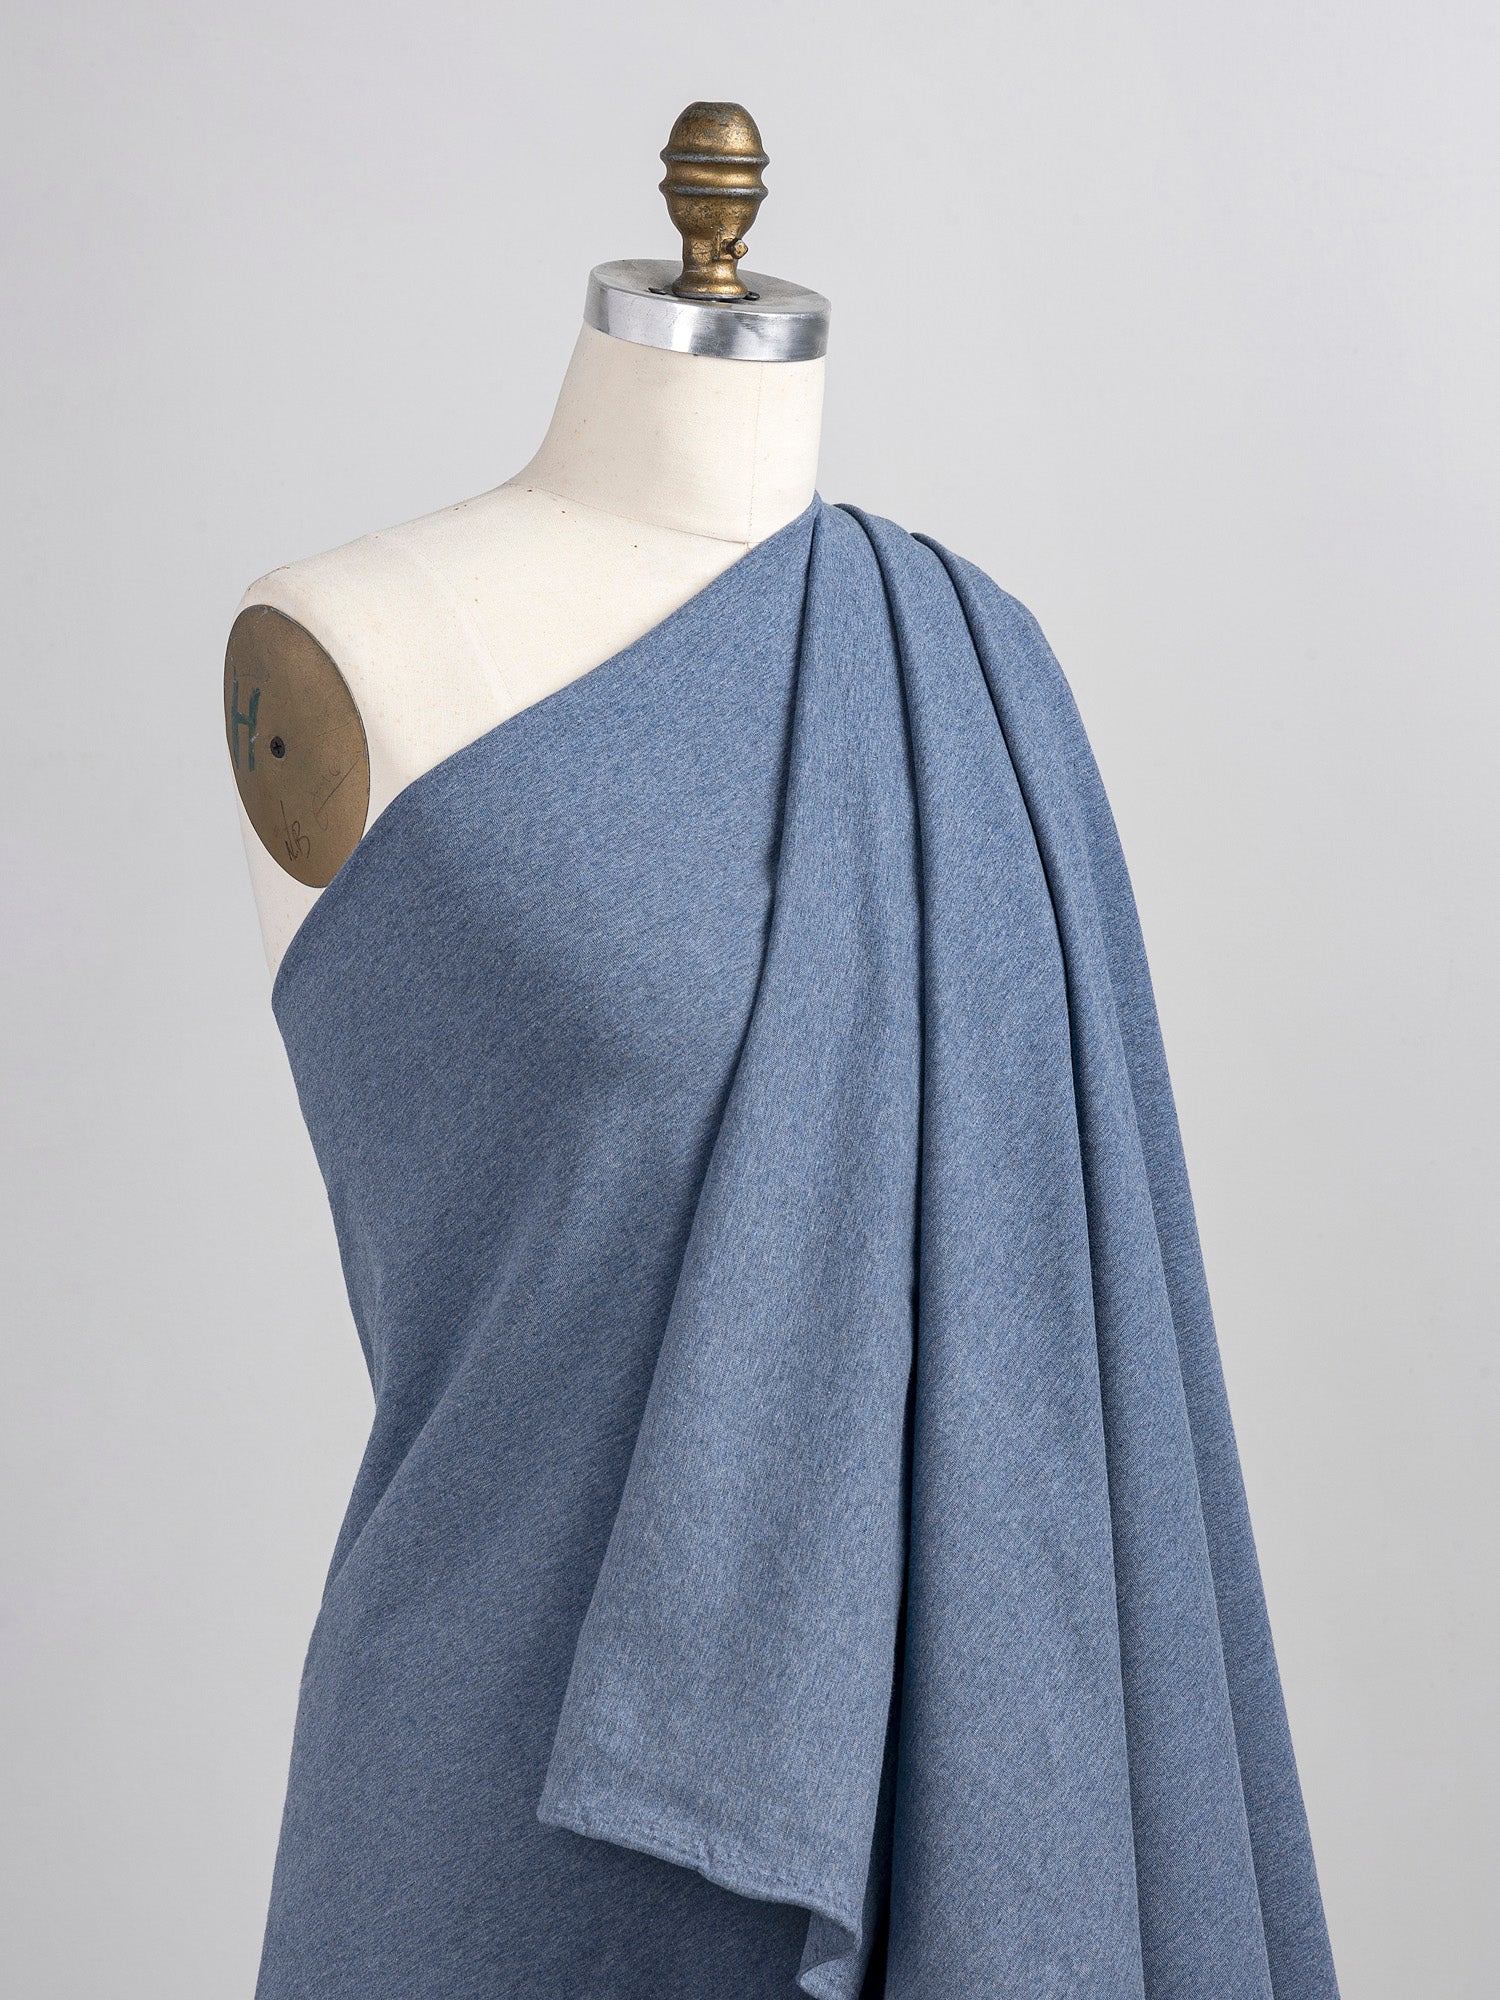 Organic Cotton Spandex Stretch Jersey Knit - Heather Blue | Core Fabrics